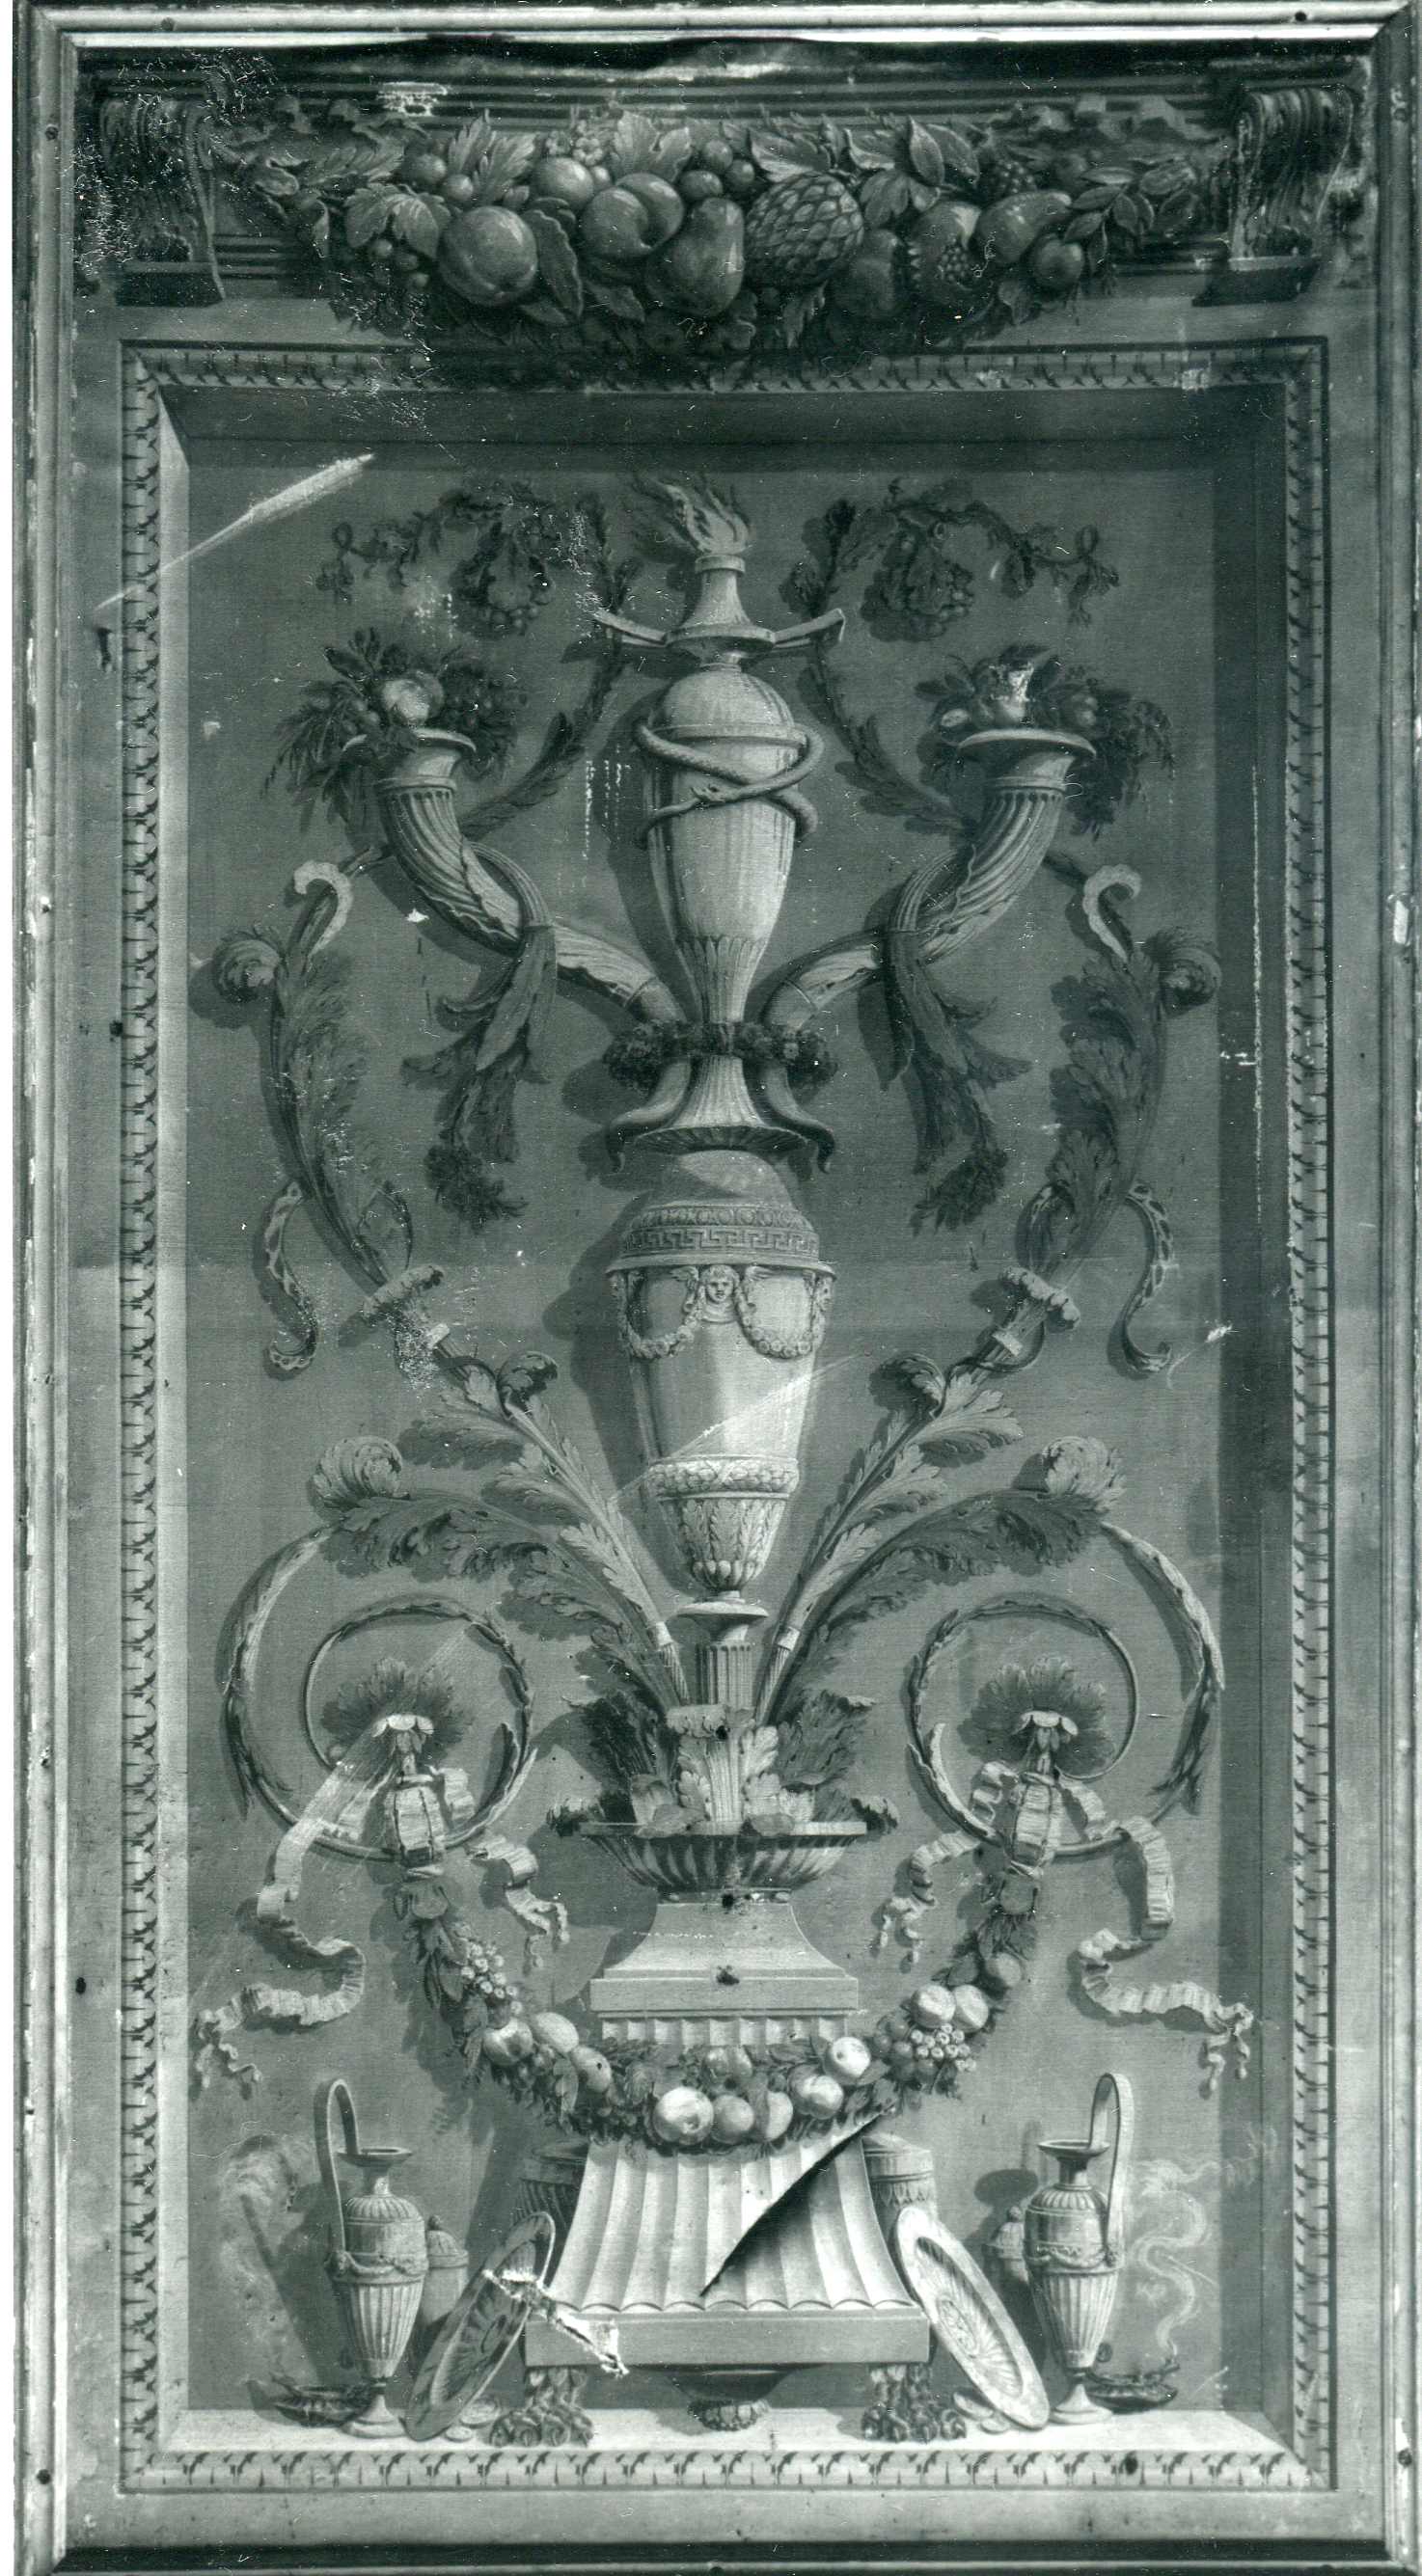 motivi decorativi a candelabra e vegetali (dipinto, coppia) di Levati Giuseppe (sec. XVIII)